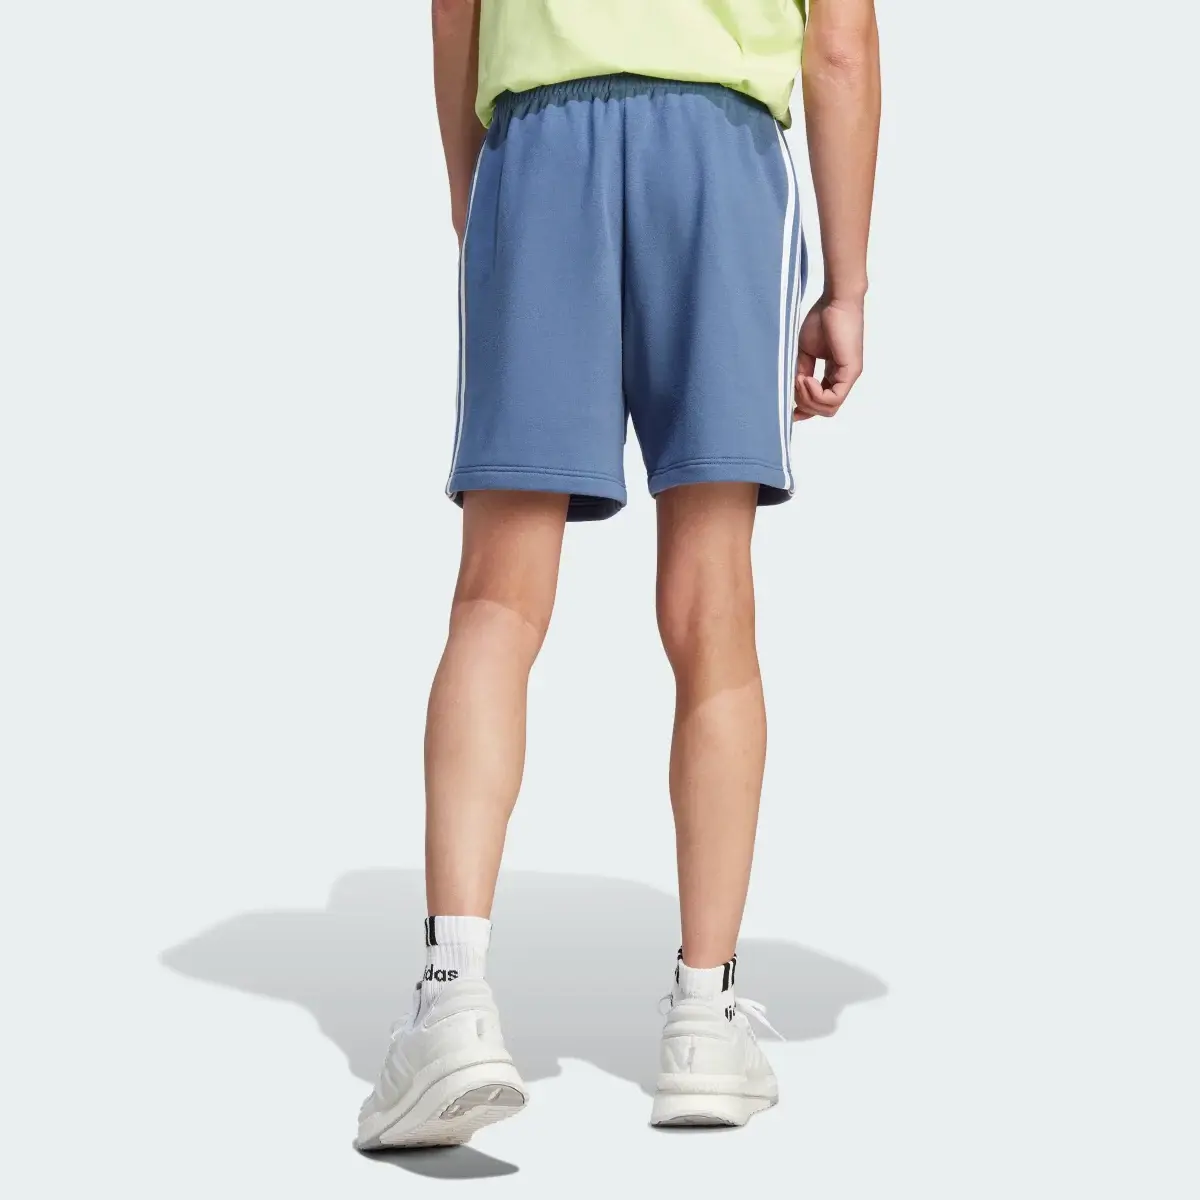 Adidas Short Colorblock. 2